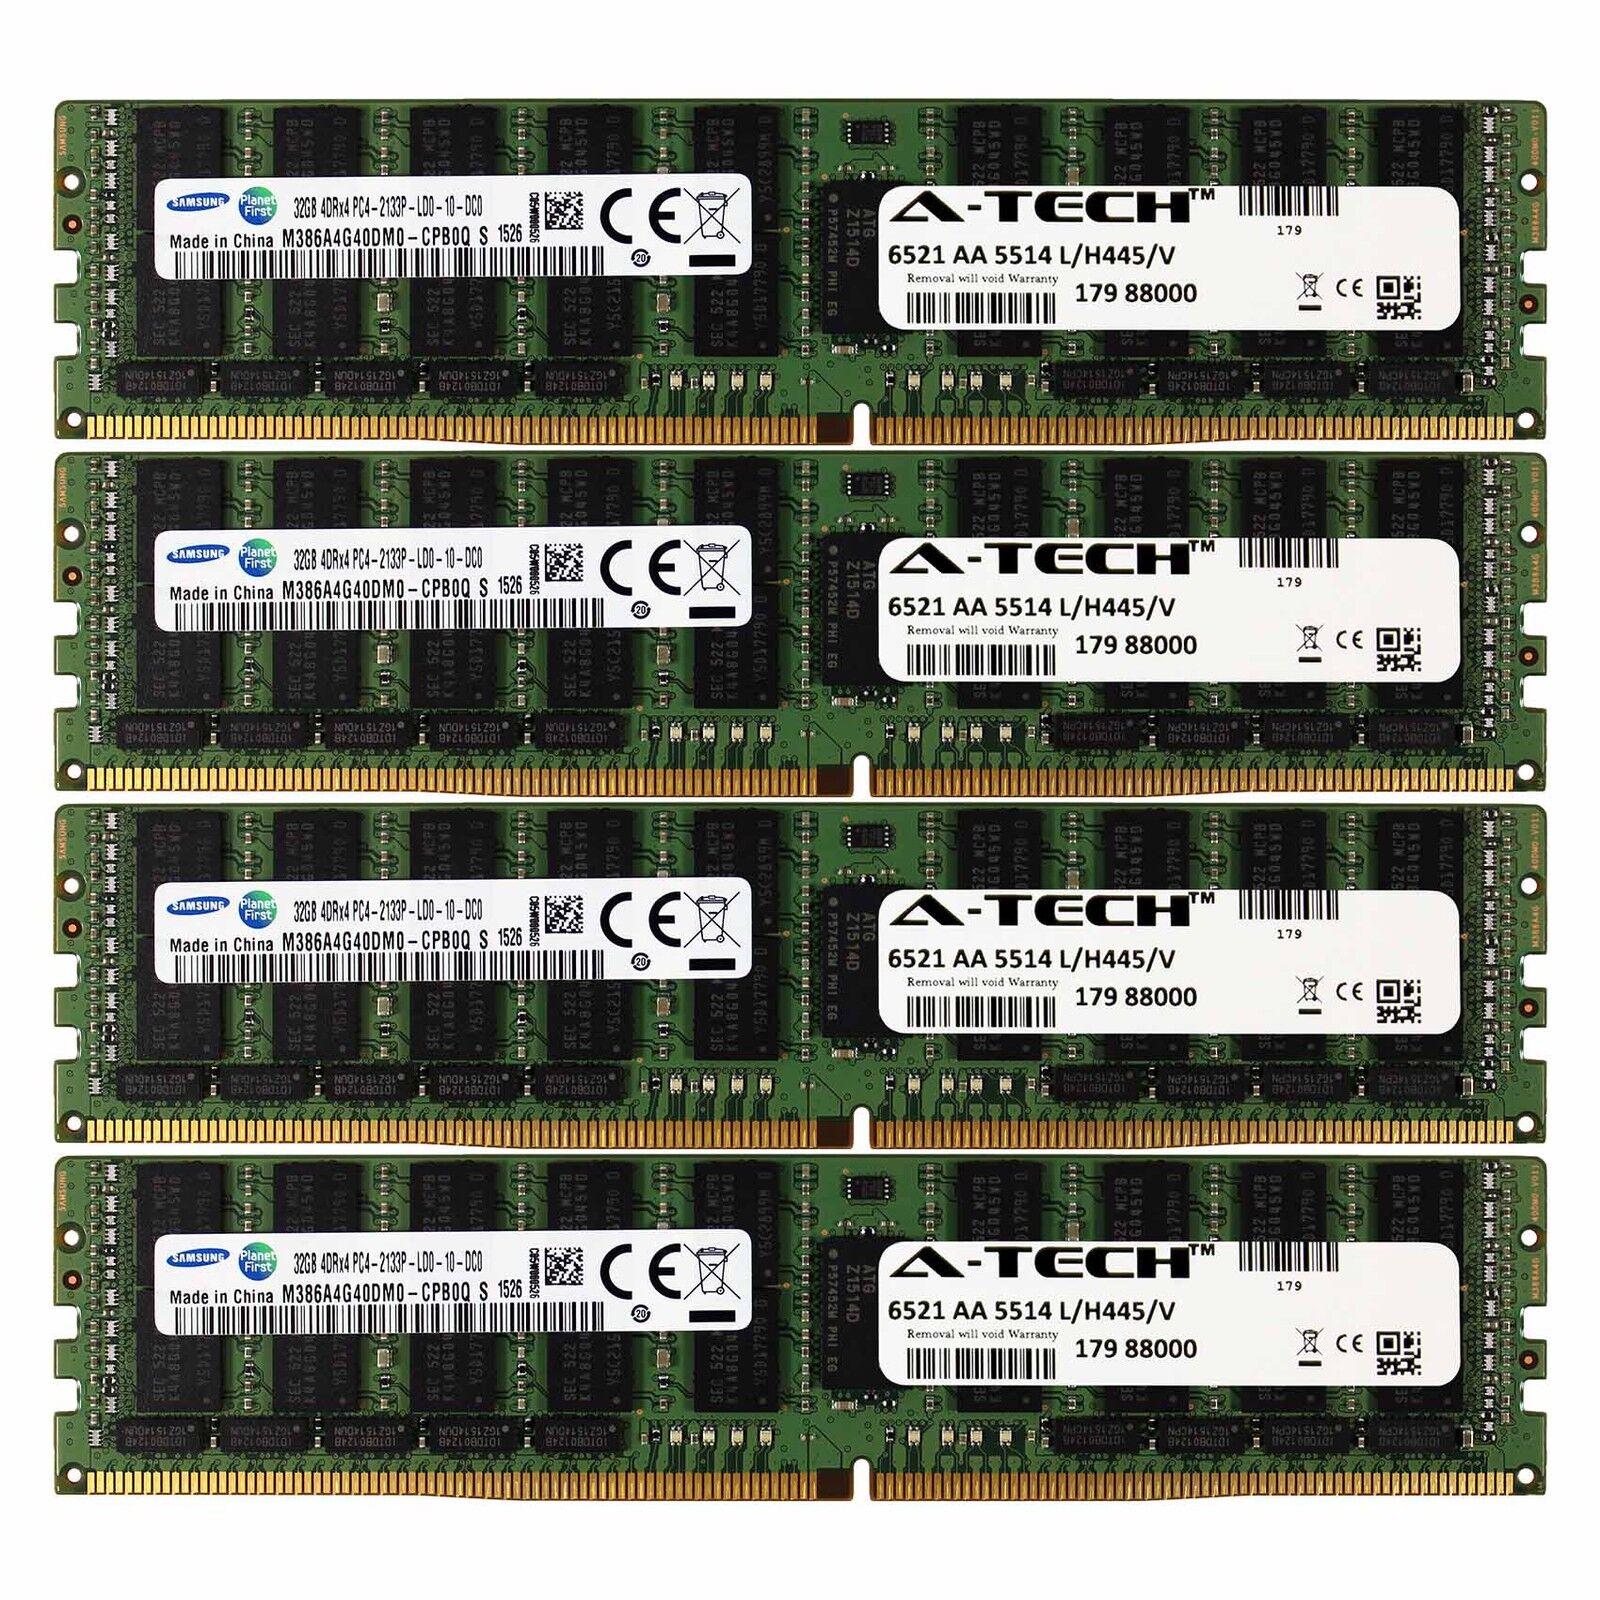 DDR4 2133MHz LRDIMM 128GB Kit 4x 32GB HP Cloudline CL2100 753225-B21 Memory RAM